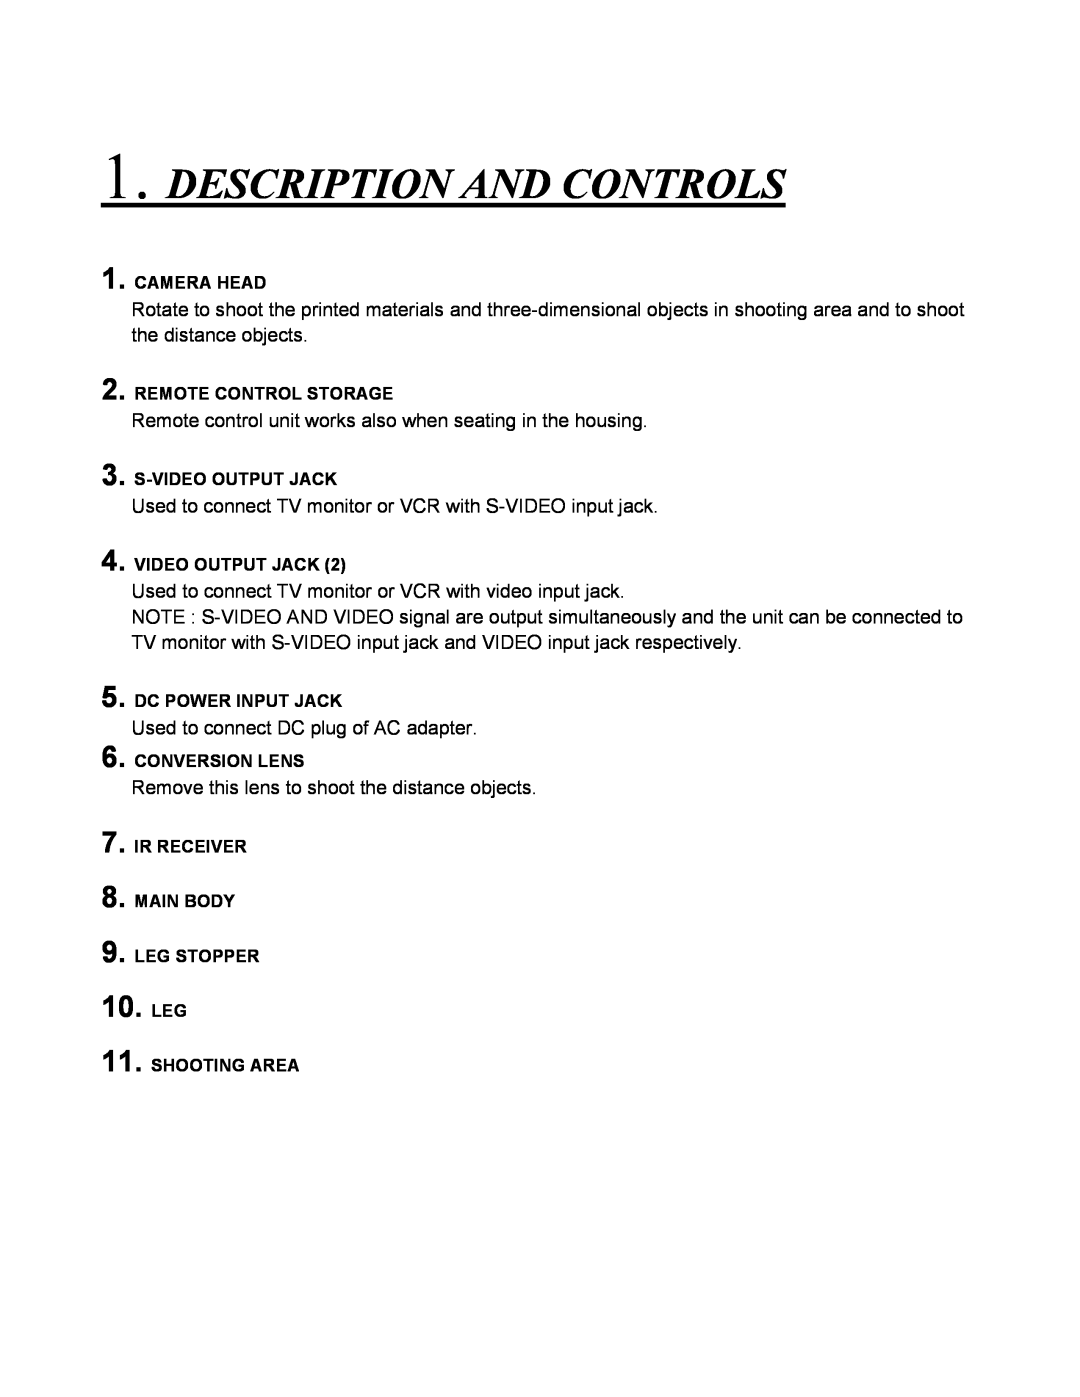 Eiki V-2500 instruction manual Description And Controls, Leg 